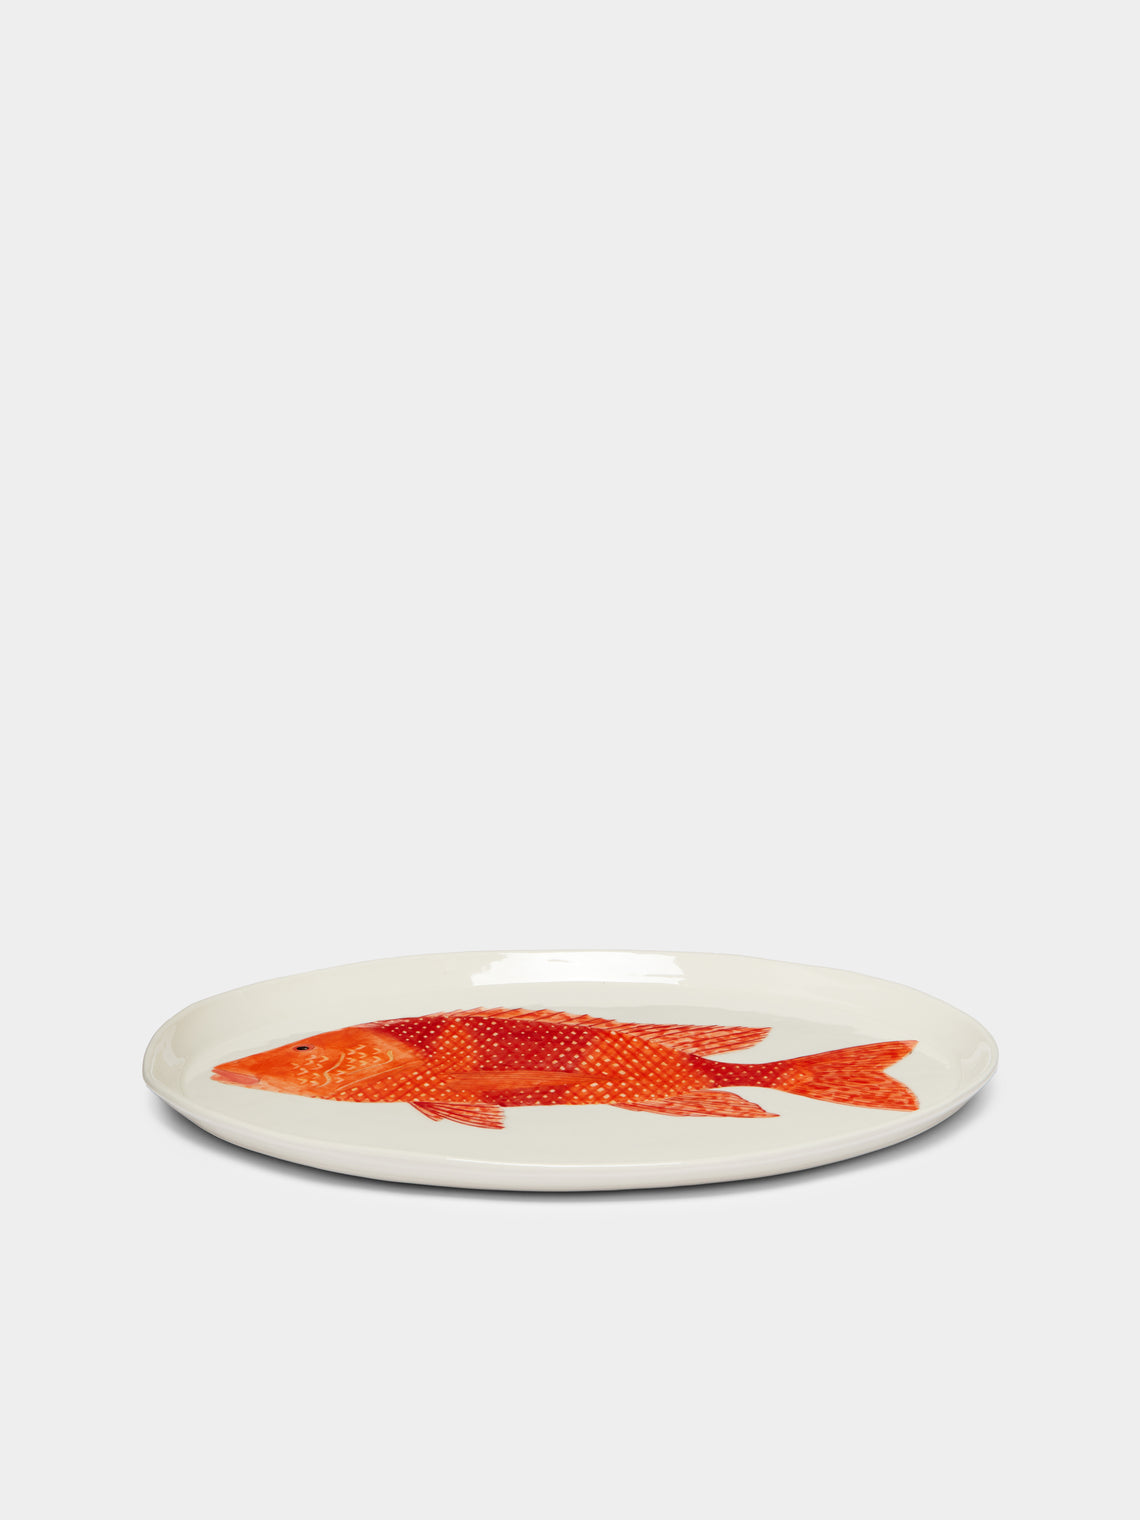 Casa Adams - Red Emperor Hand-Painted Porcelain Serving Platter -  - ABASK